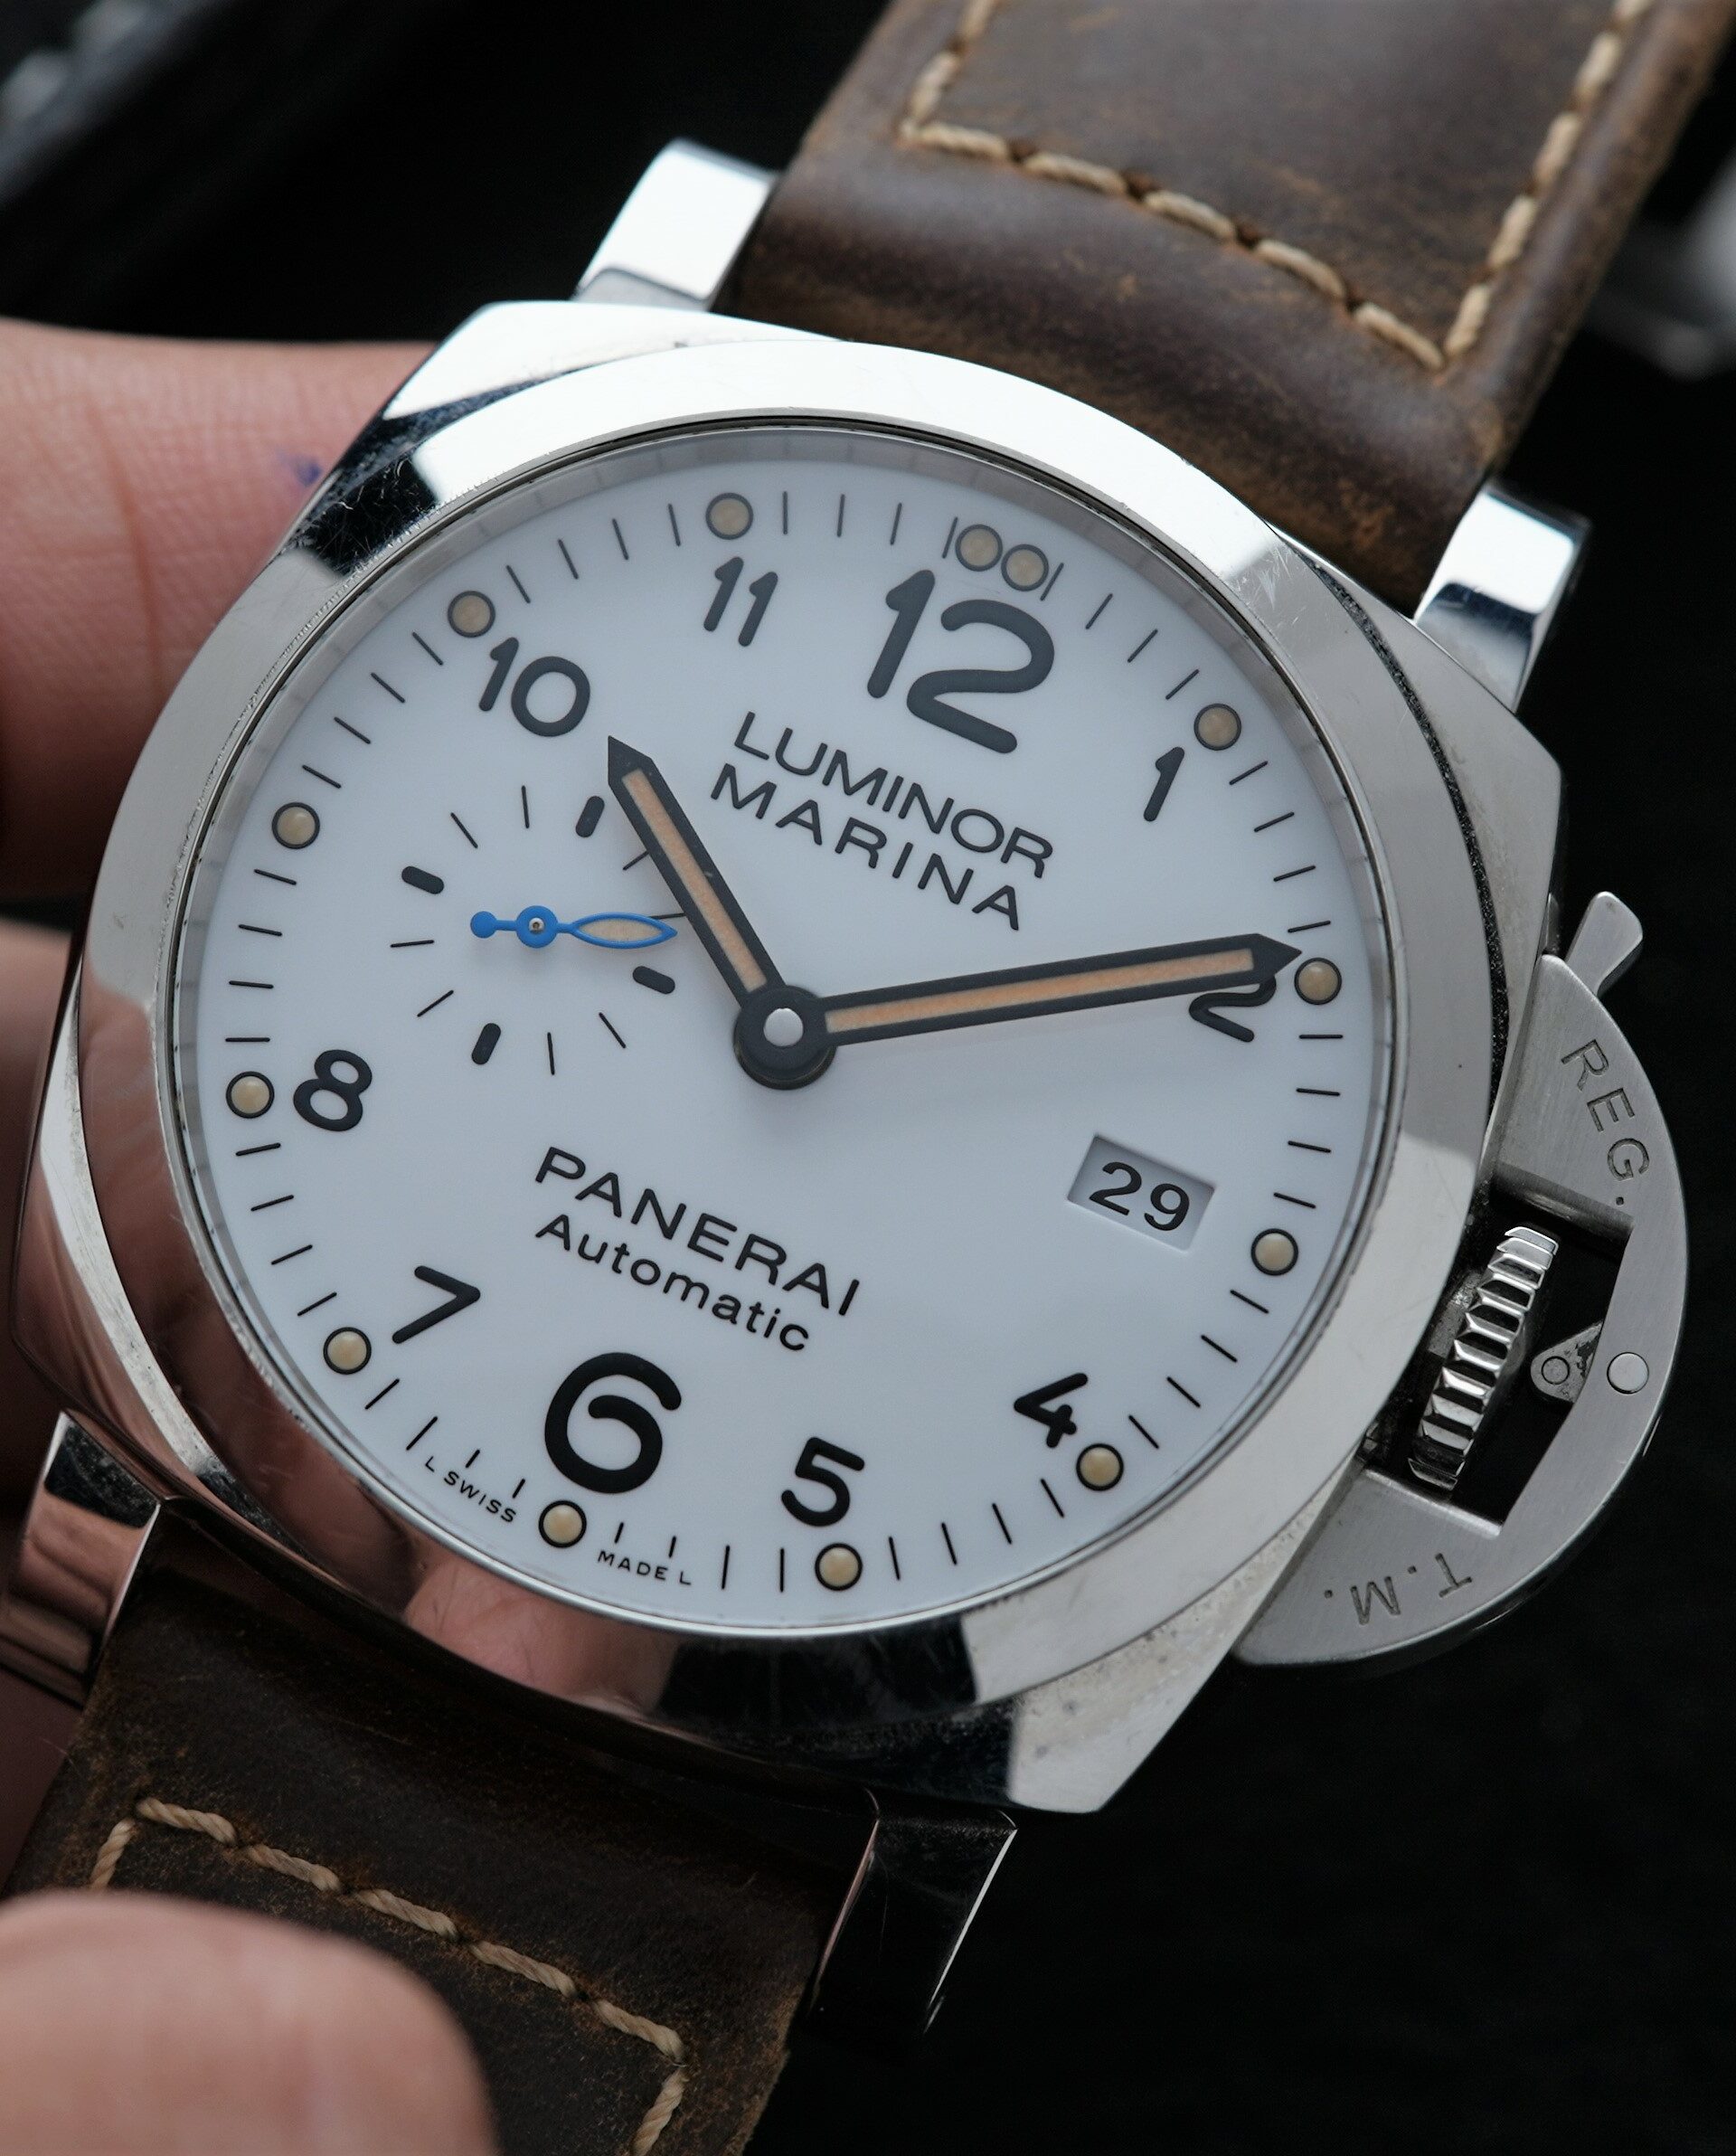 Panerai Luminor Marina 1950 3 Days Automatic Pam01499 Automatic wristwatch being held in hand.